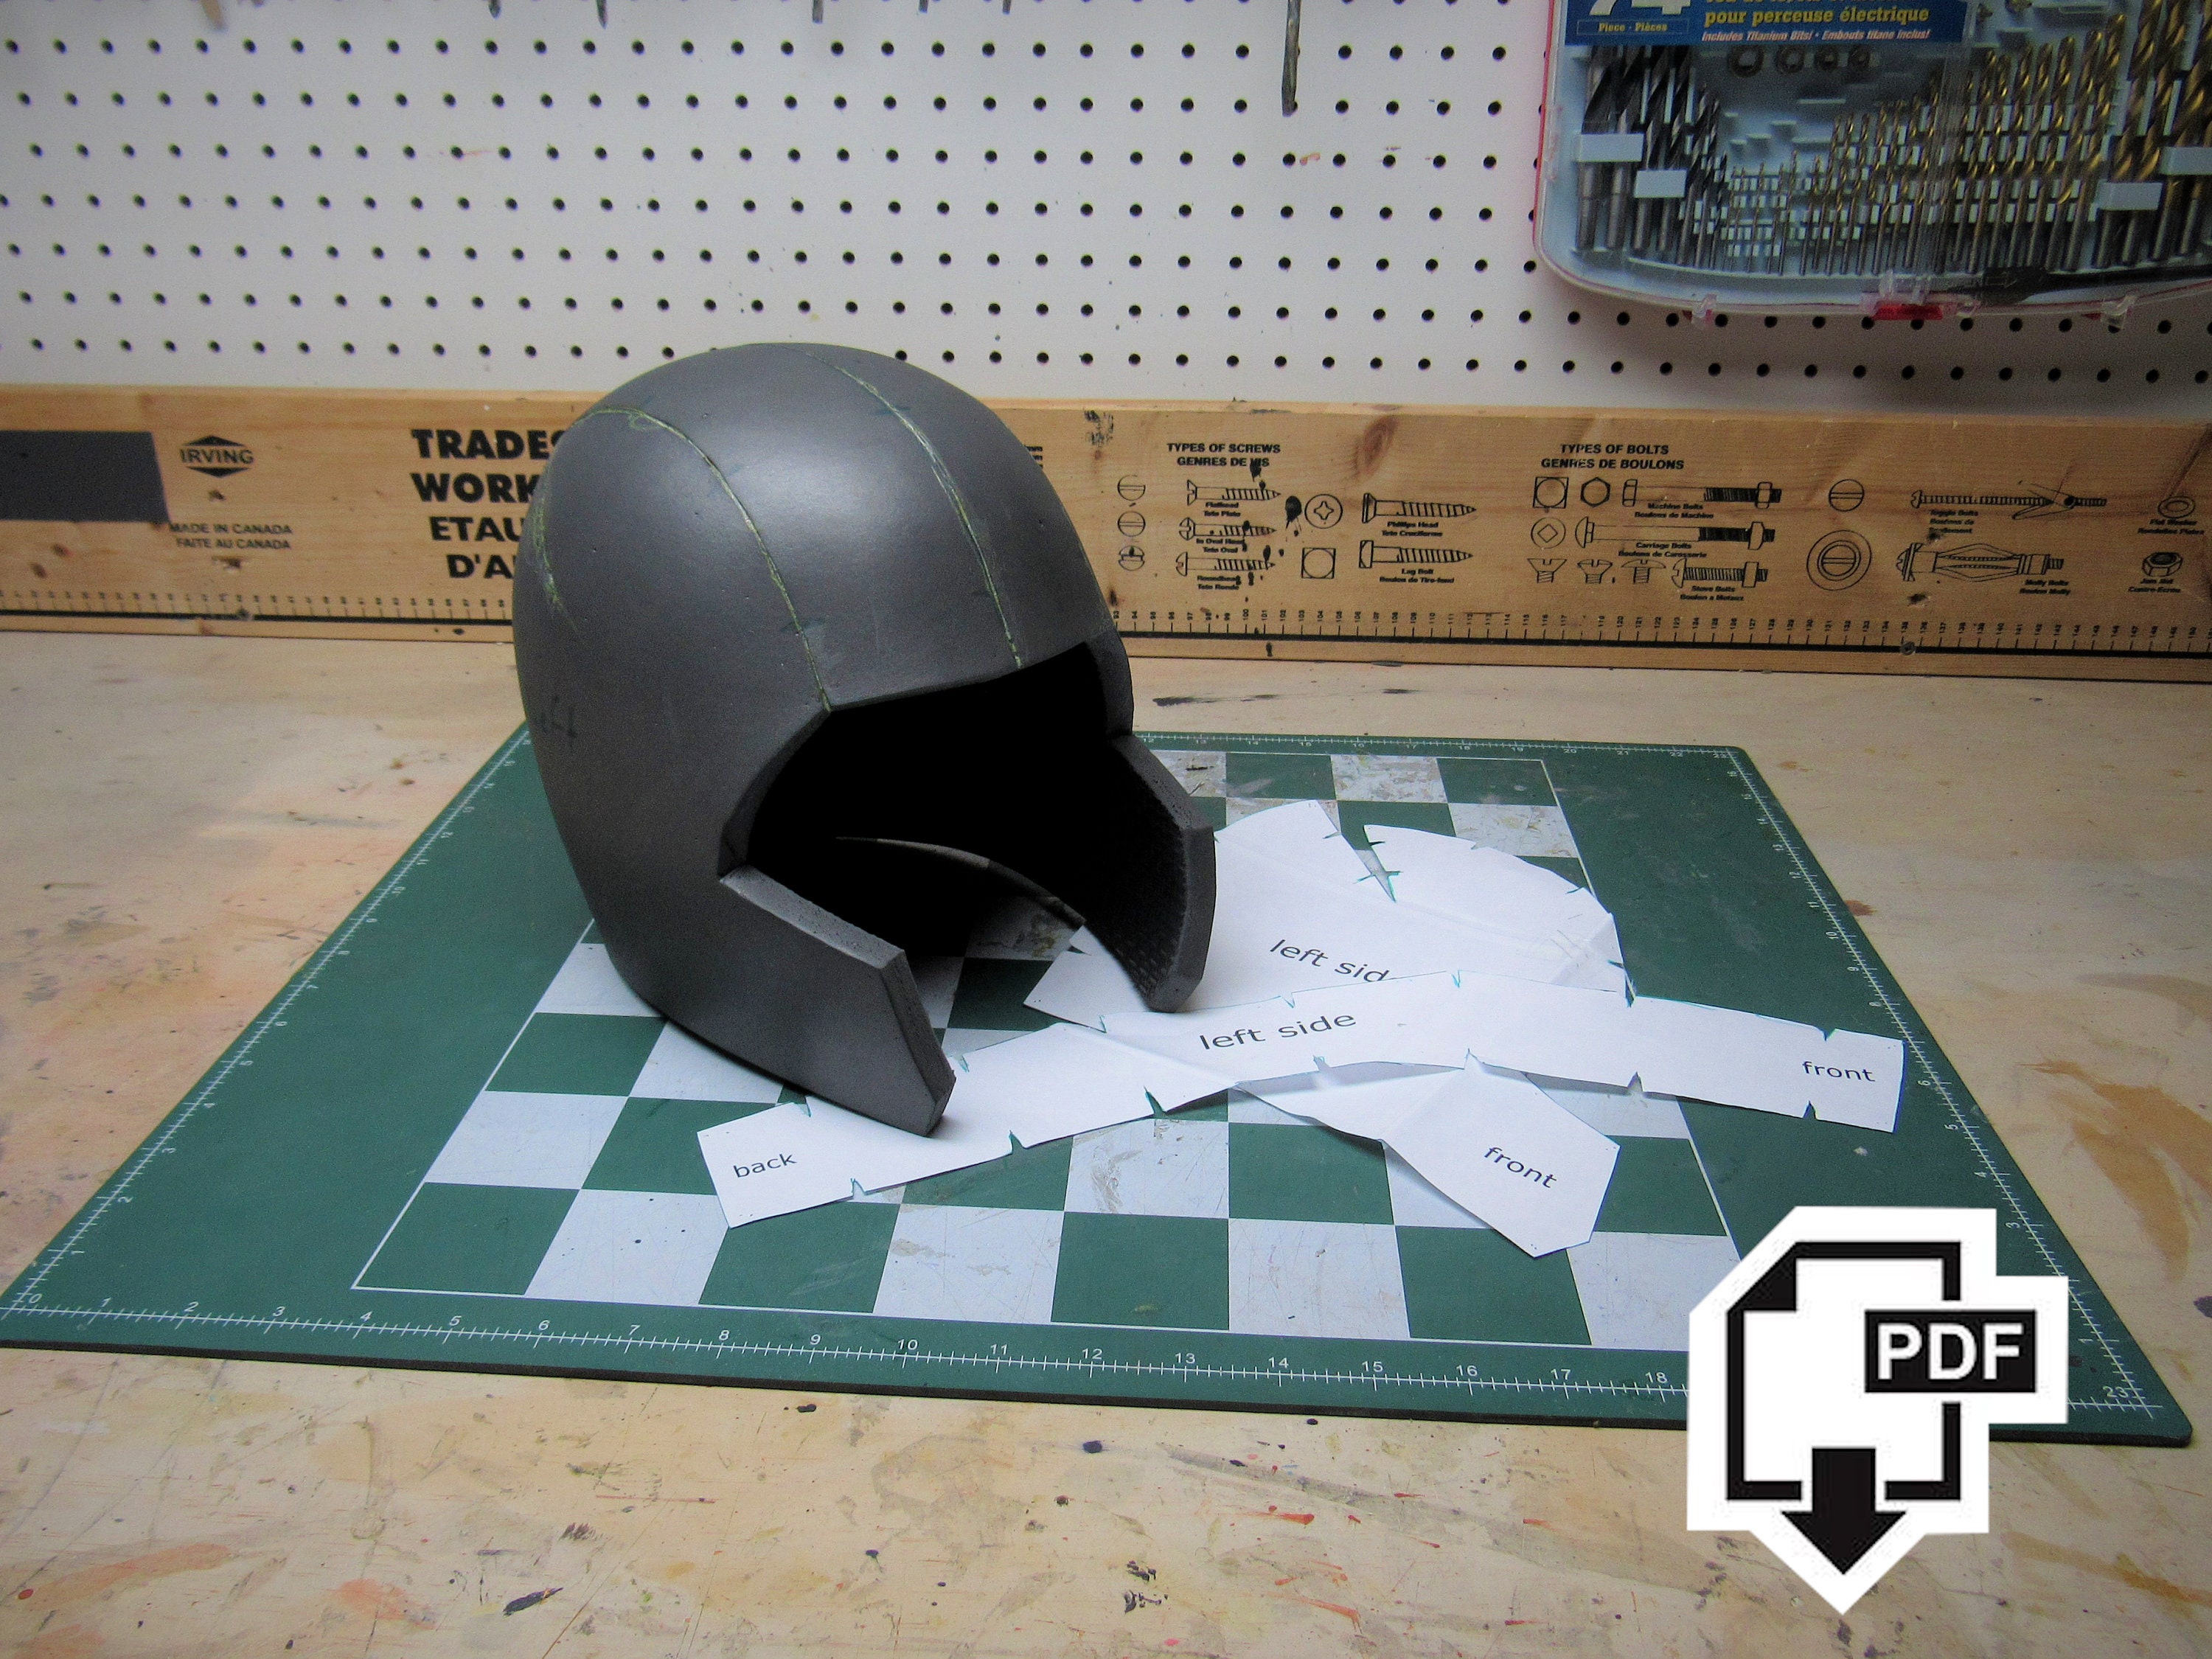 chainsaw helmet for phoam